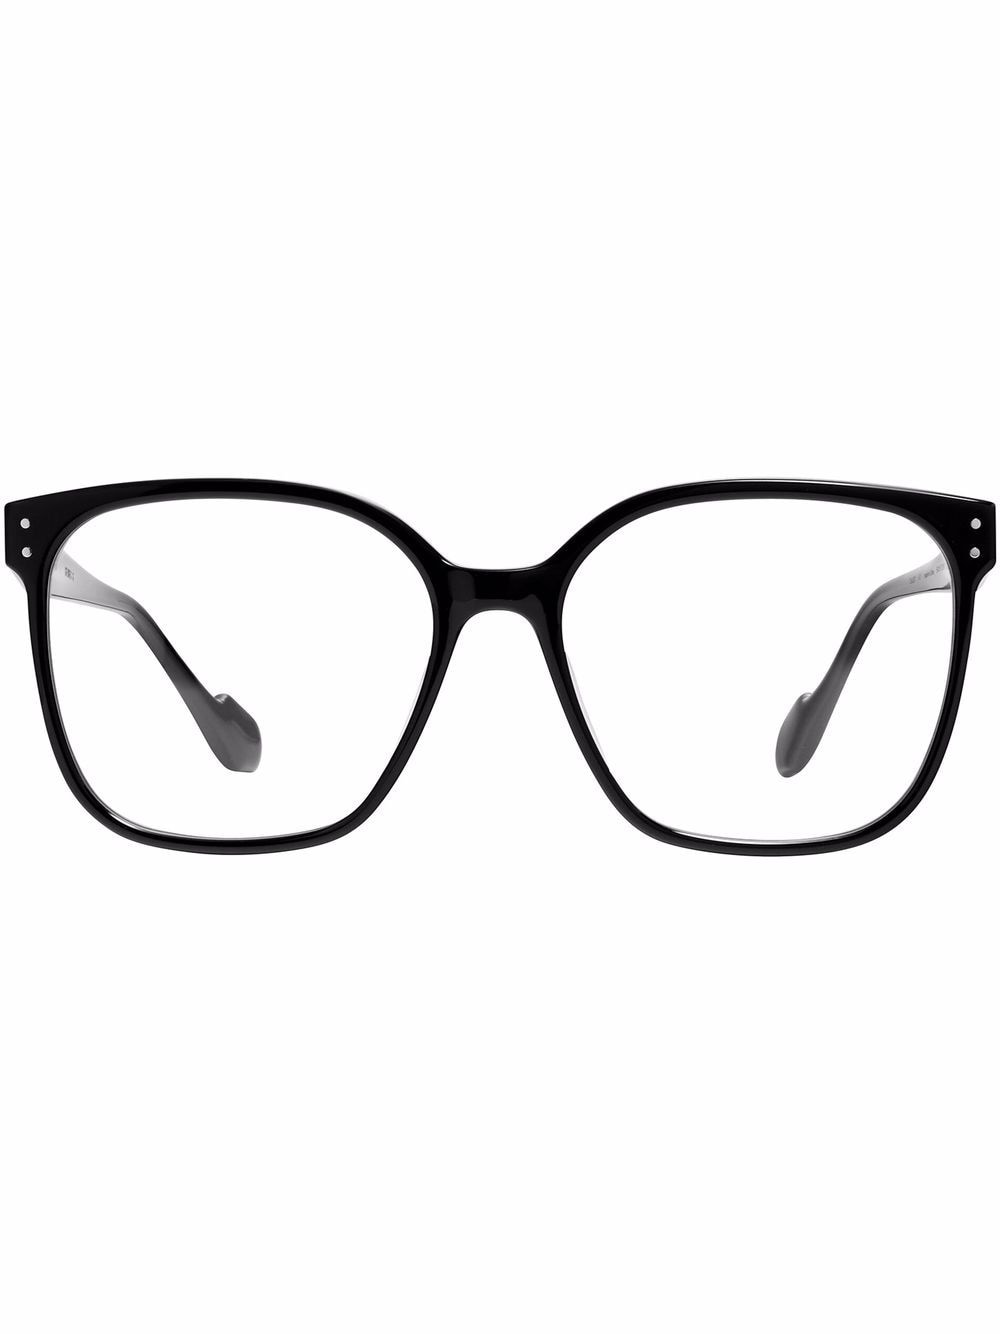 Ata 01 square-frame glasses